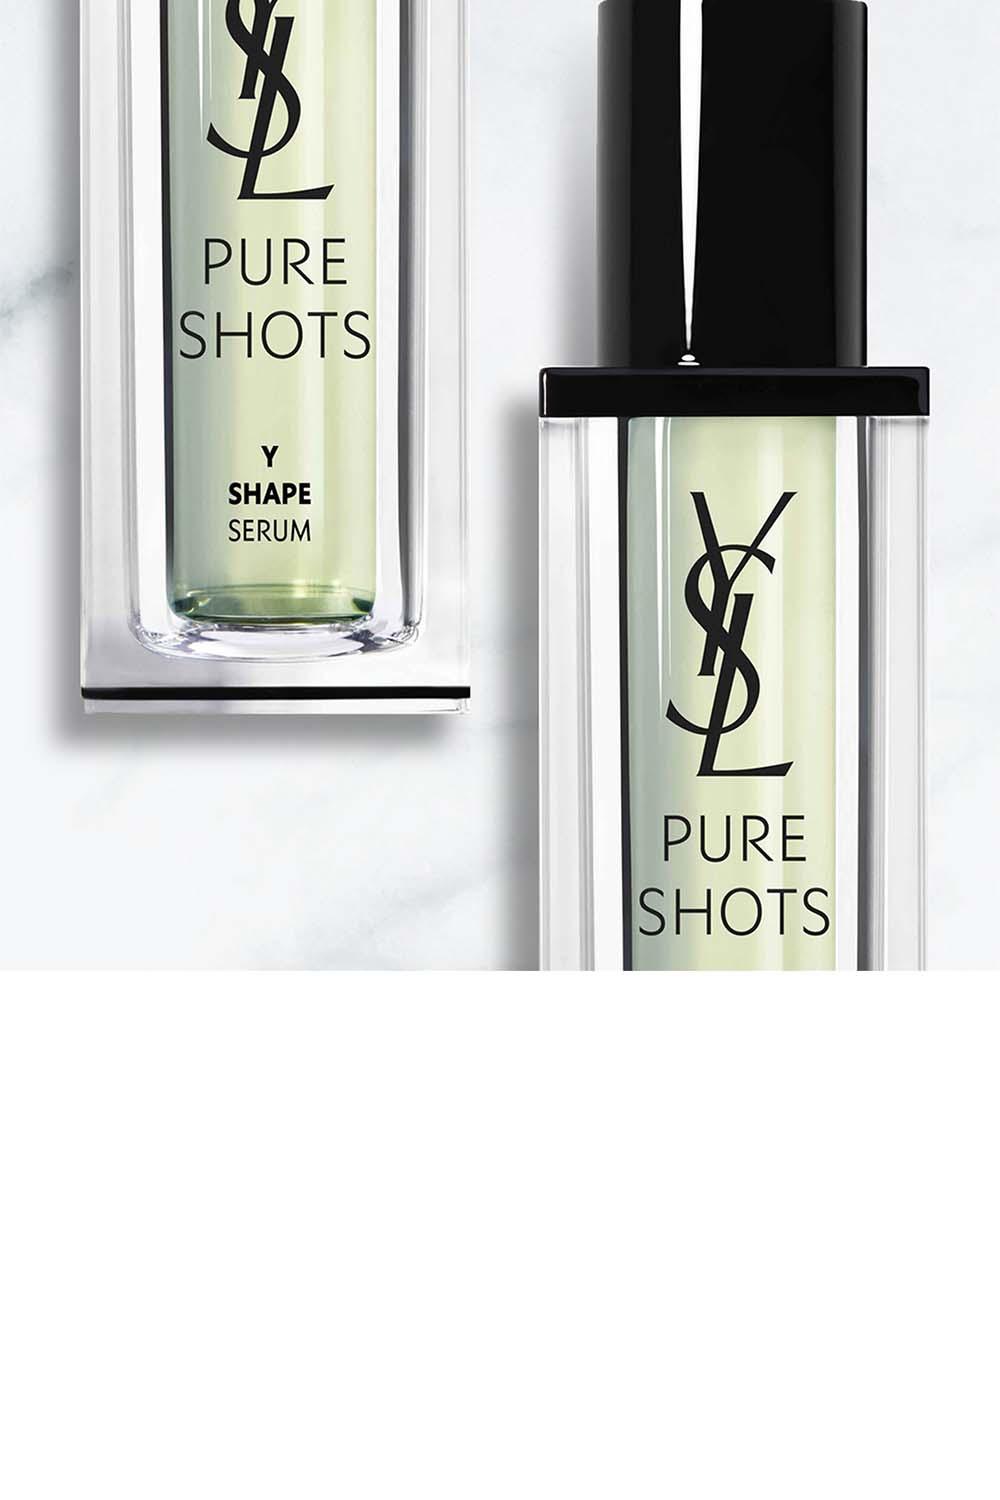 Yves Saint Laurent - סרום PURE SHOT Y SHAPE למיצוק אזור הפנים והצוואר 30 מ"ל - MASHBIR//365